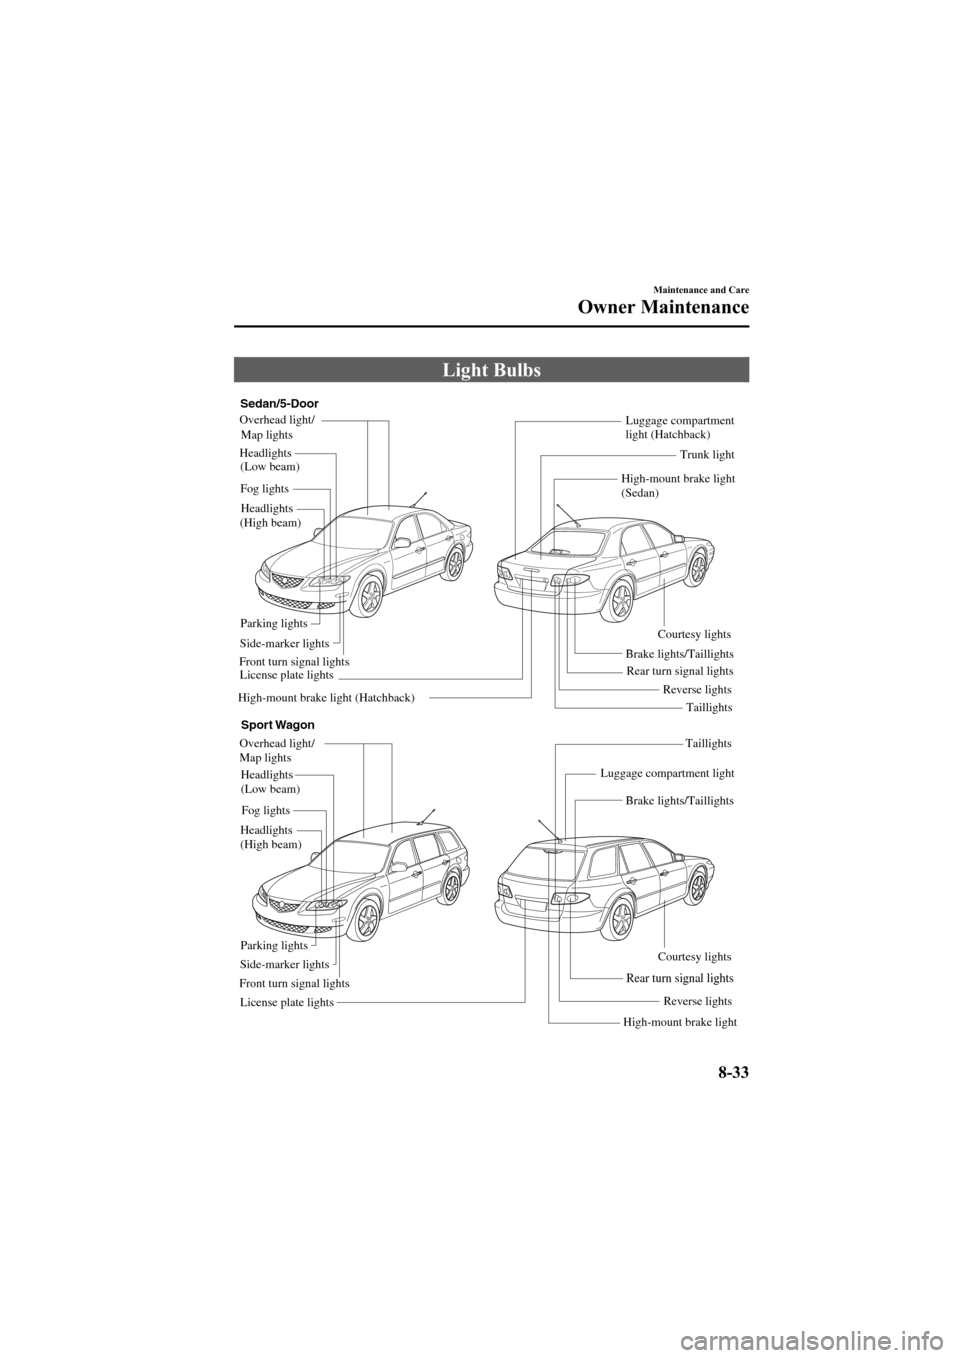 MAZDA MODEL 6 2005   (in English) Service Manual Black plate (283,1)
Light Bulbs
Luggage compartment 
light (Hatchback)
High-mount brake light 
(Sedan)
Headlights
(High beam)Headlights
(Low beam) Overhead light/ 
Map lights
Luggage compartment light